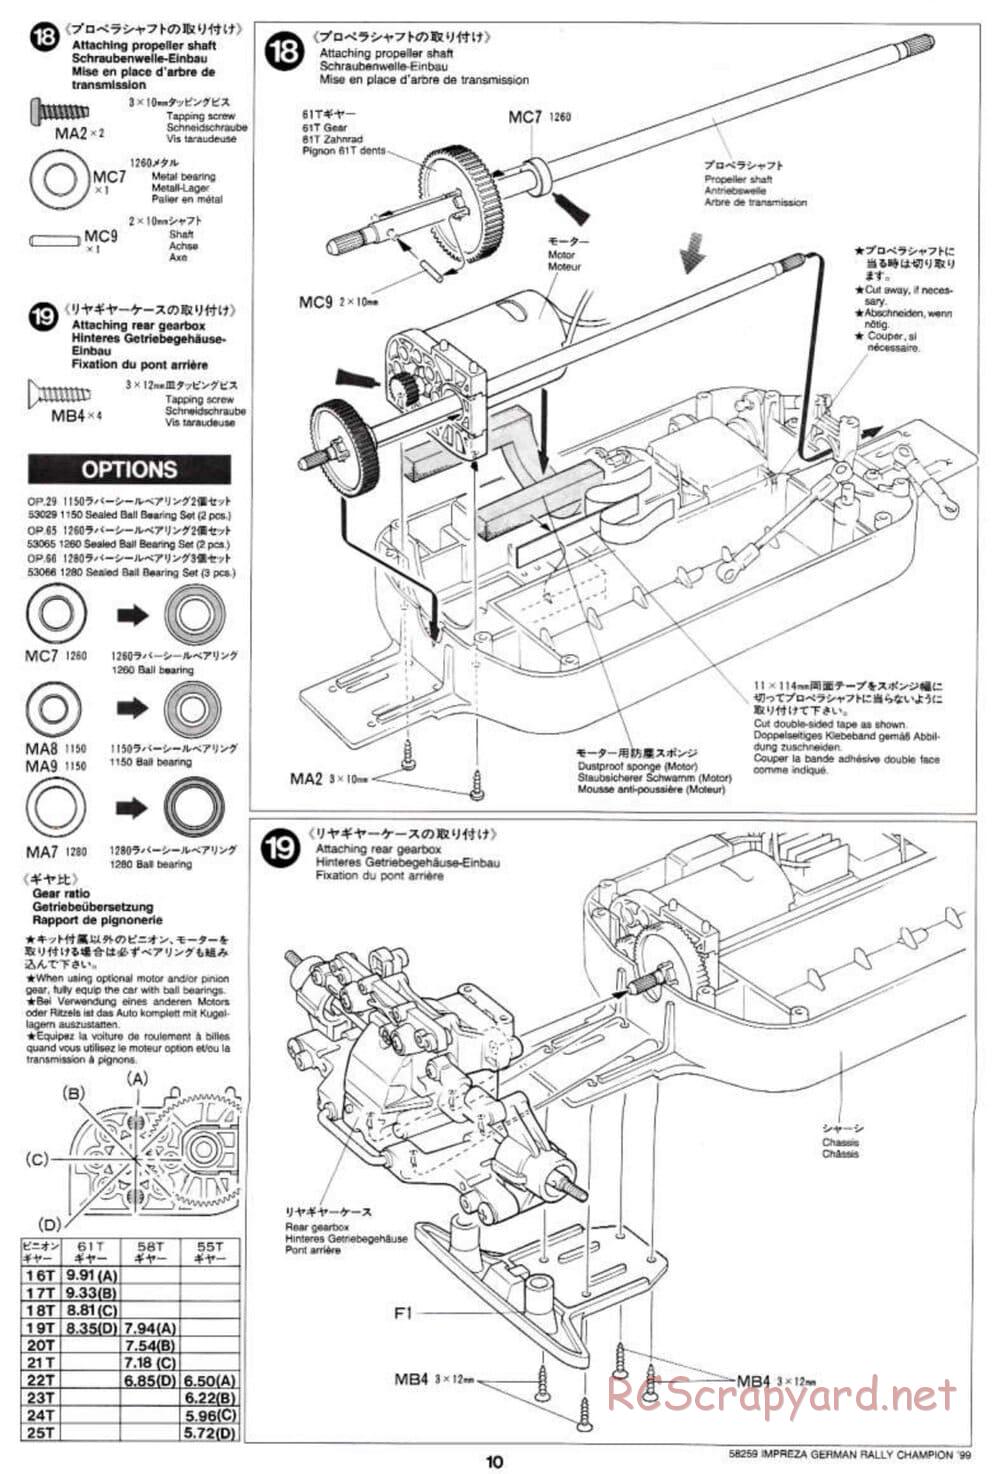 Tamiya - Subaru Impreza German Rally Champion 99 - TB-01 Chassis - Manual - Page 10